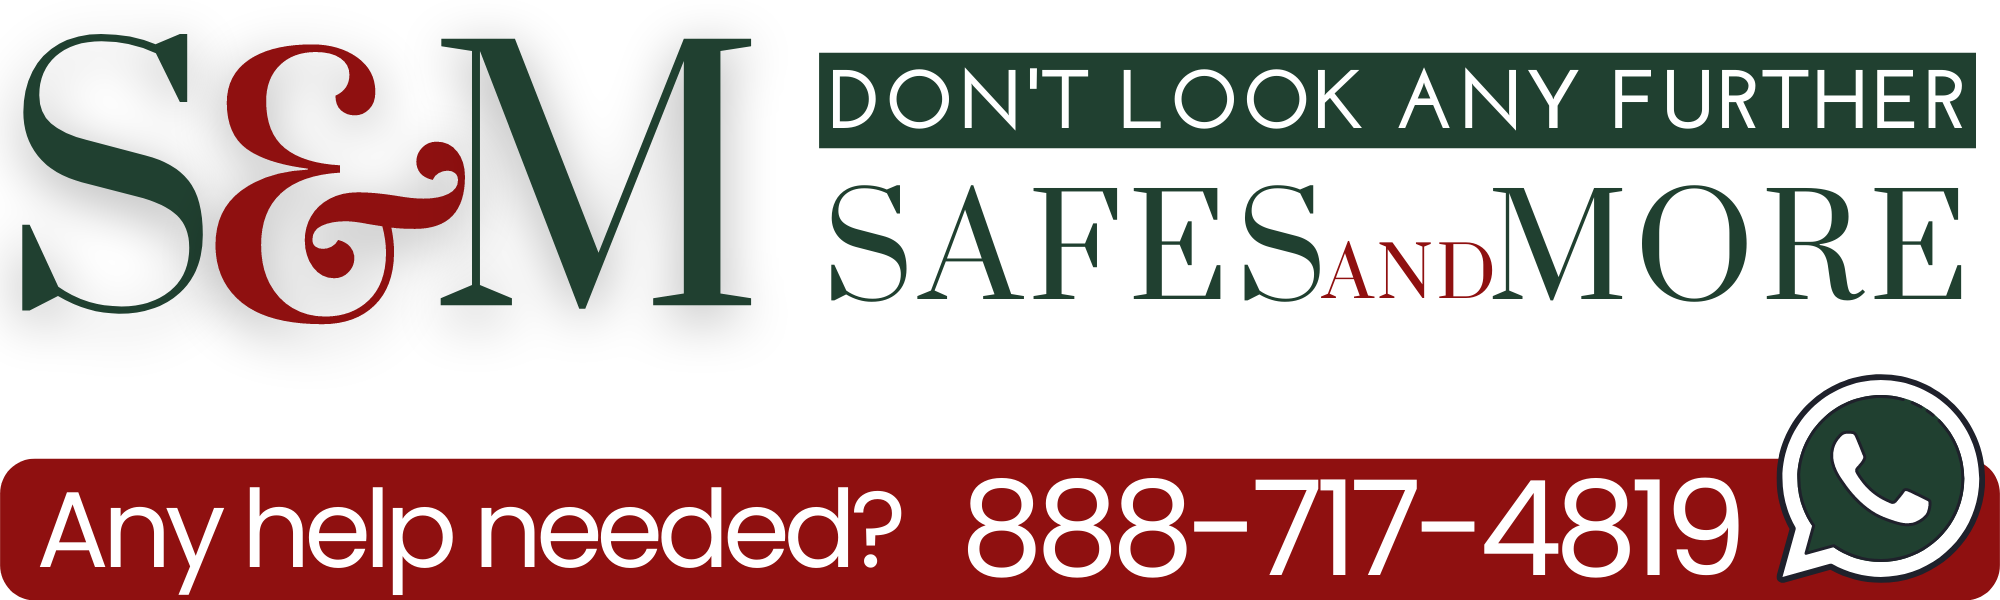 safesandmore best promo best offer gun safes fireproof safes, jewelry safes, autorized dealer